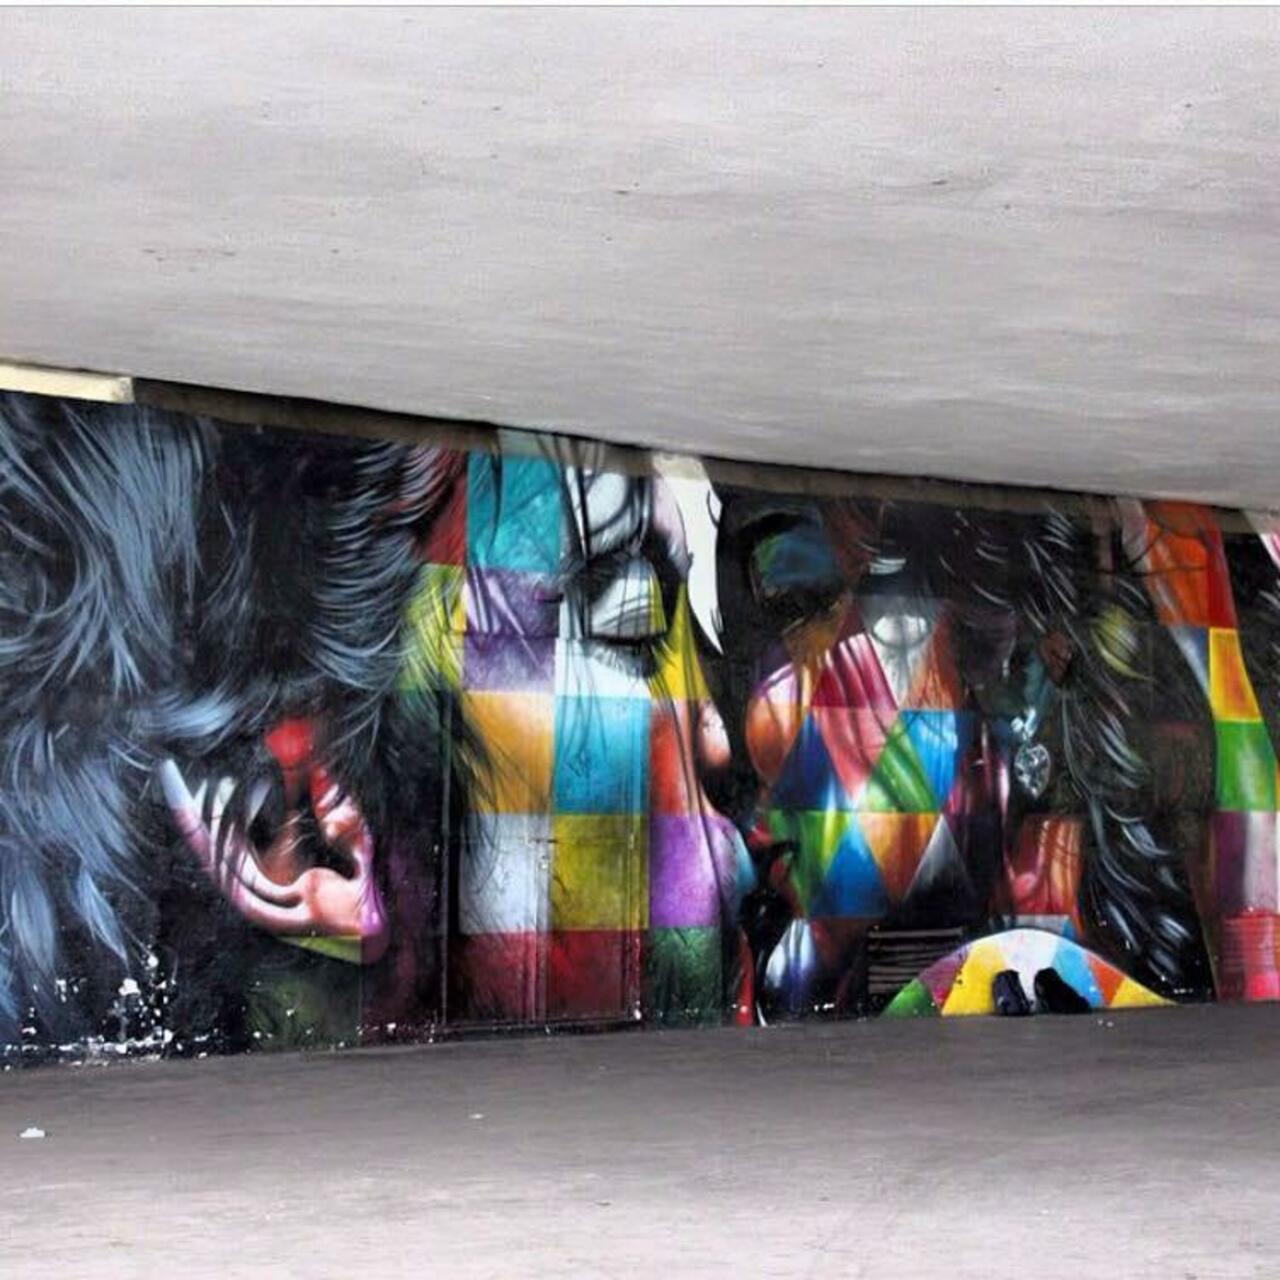 New Street Art by the brilliant Eduardo Kobra 

#art #mural #graffiti #streetart http://t.co/t0fIk5yO56